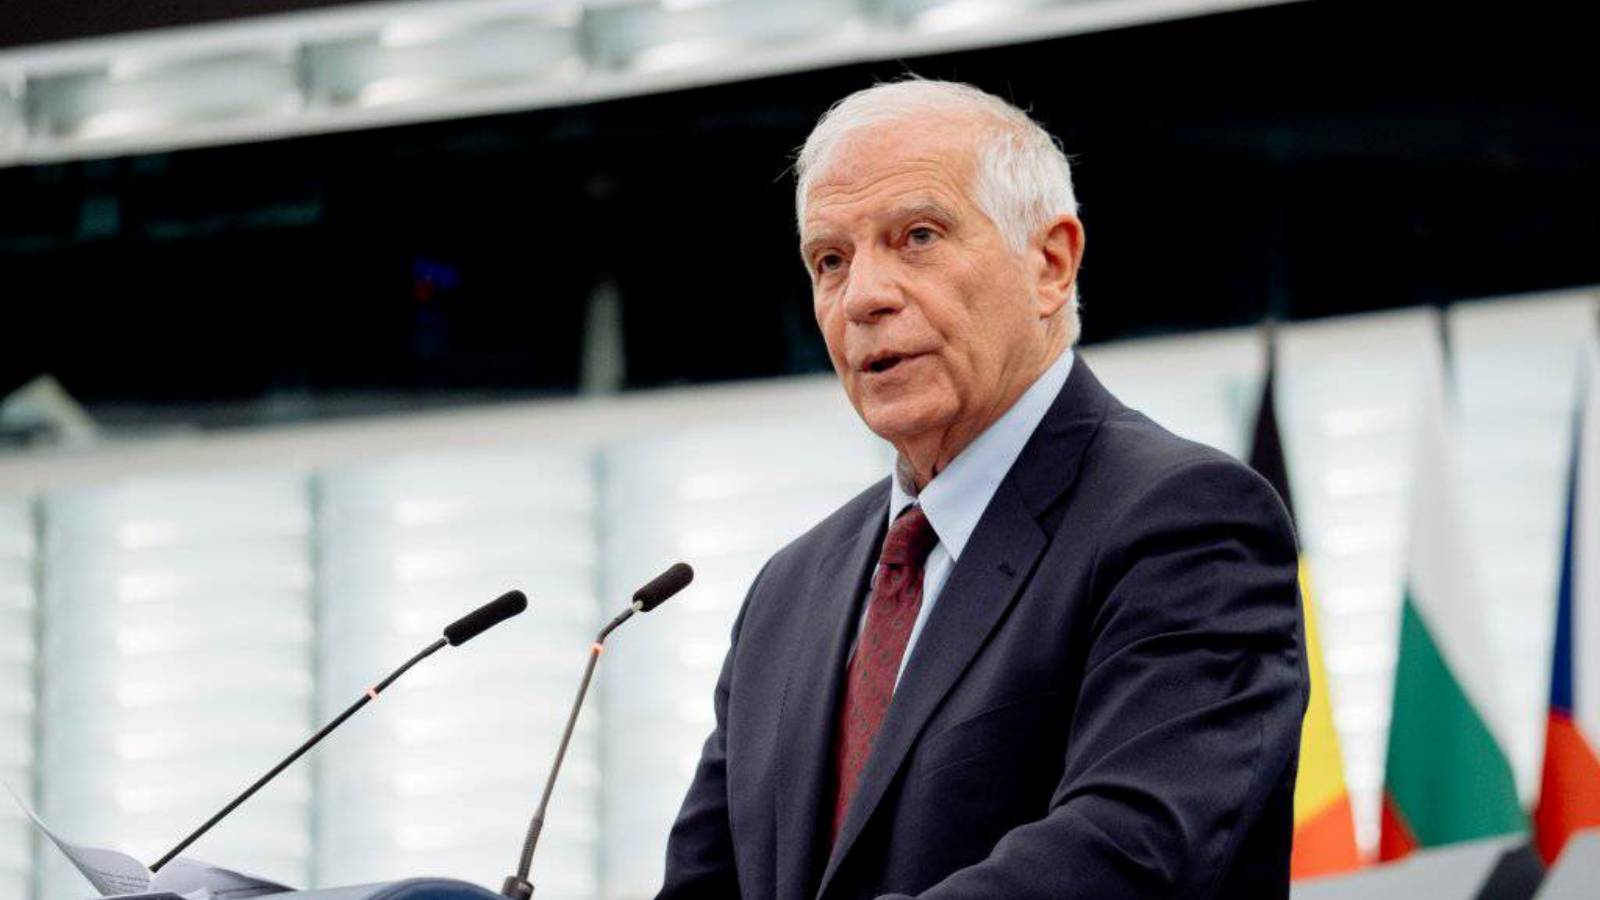 Josep Borrell Cere Industria Aparare Europei Evolueze cauza Razboiului Ucraina